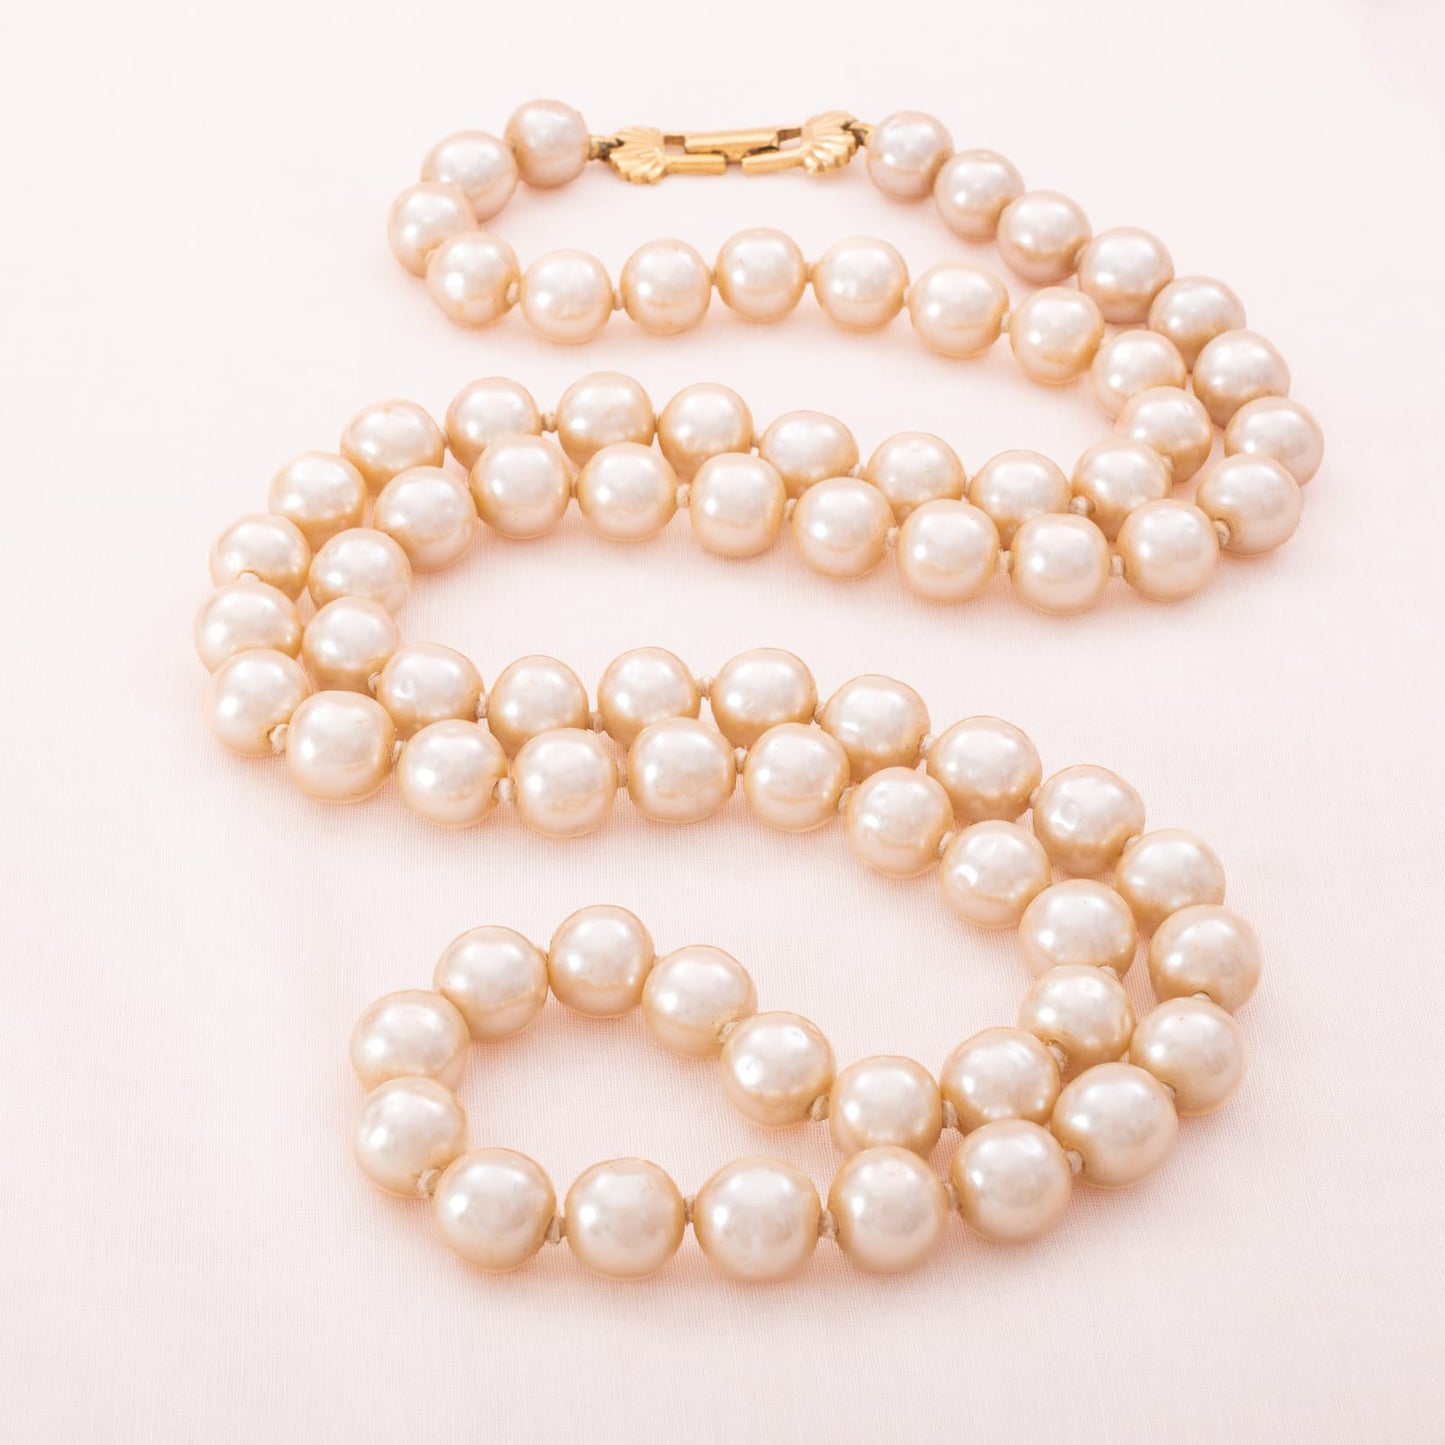 Lange-Perlenkette-hochwertig-vergoldeter-Verschluss